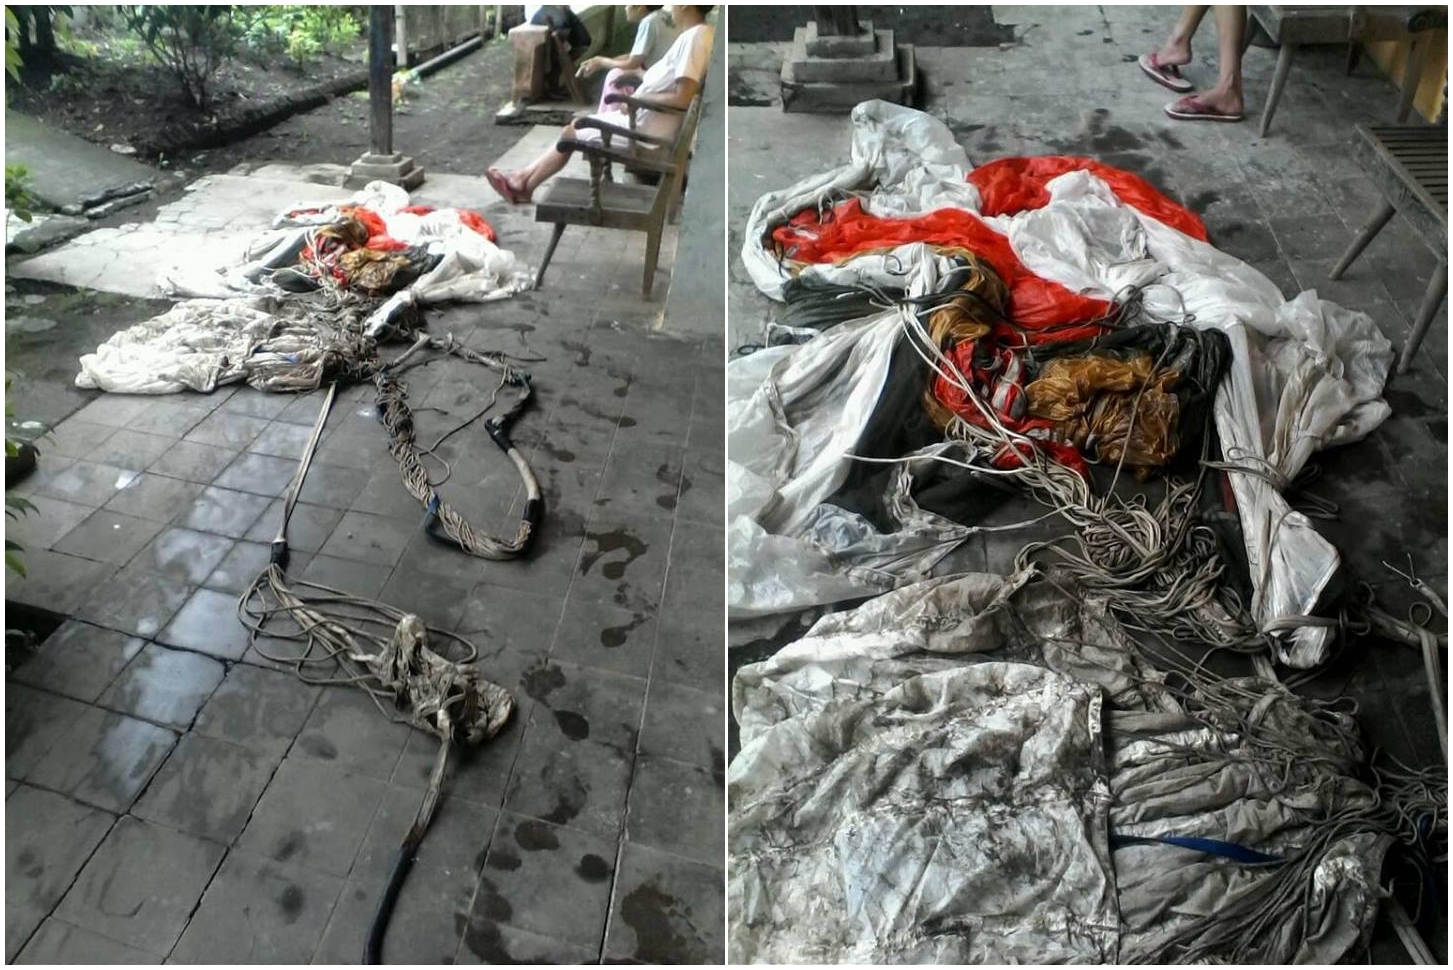 Ini foto-foto pesawat jatuh di Malang